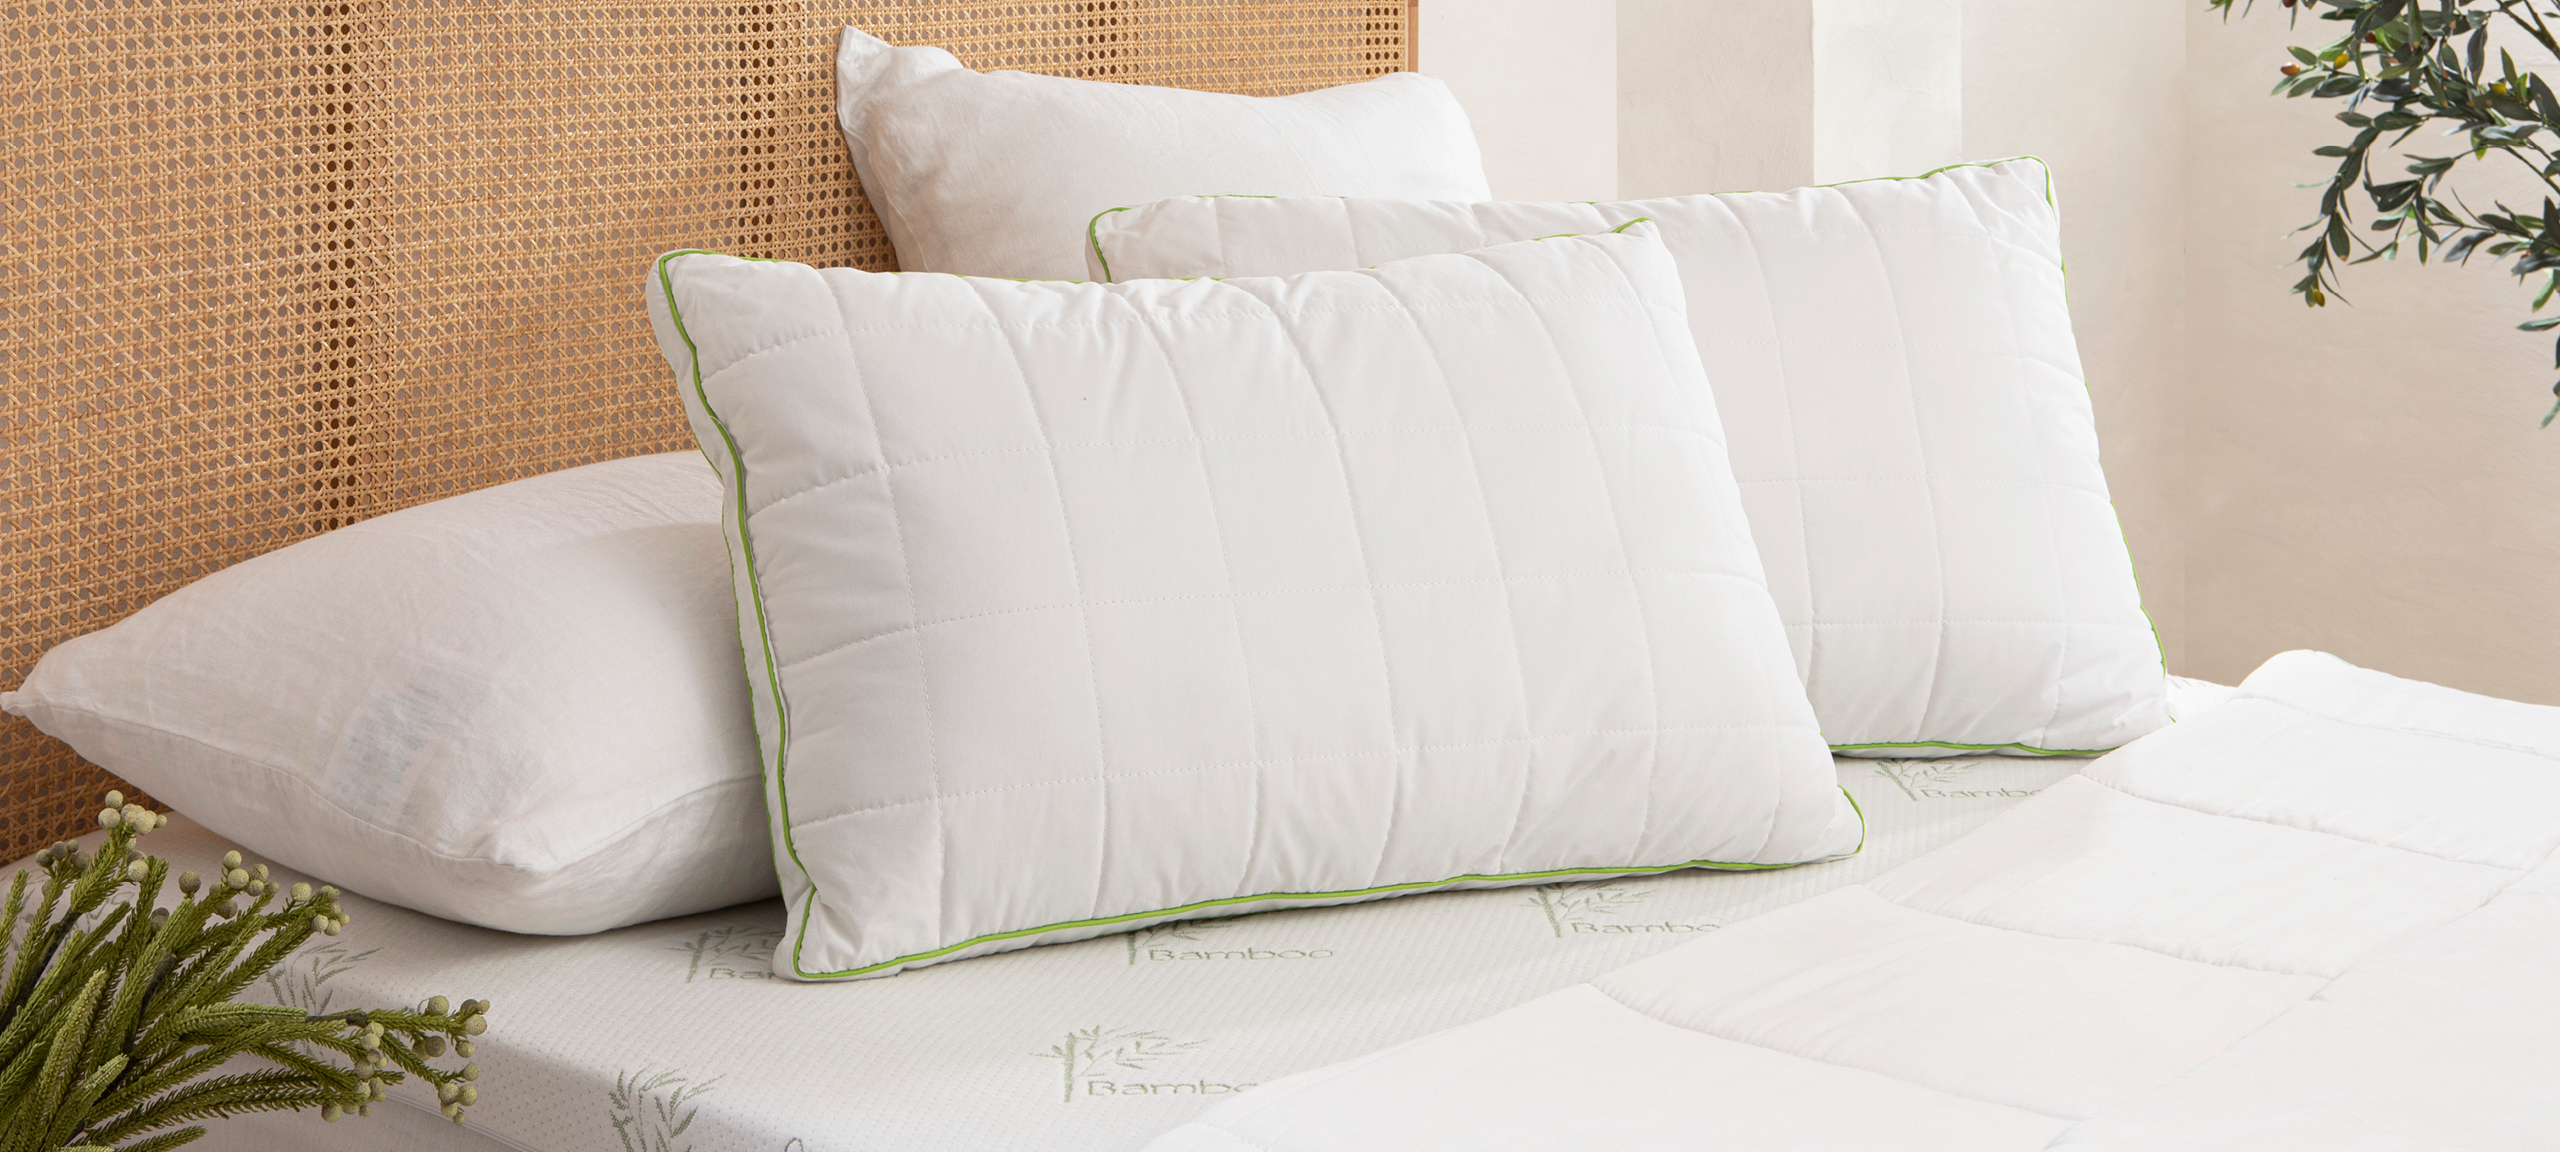 Pillow Talk exclusive greenfirst pillows